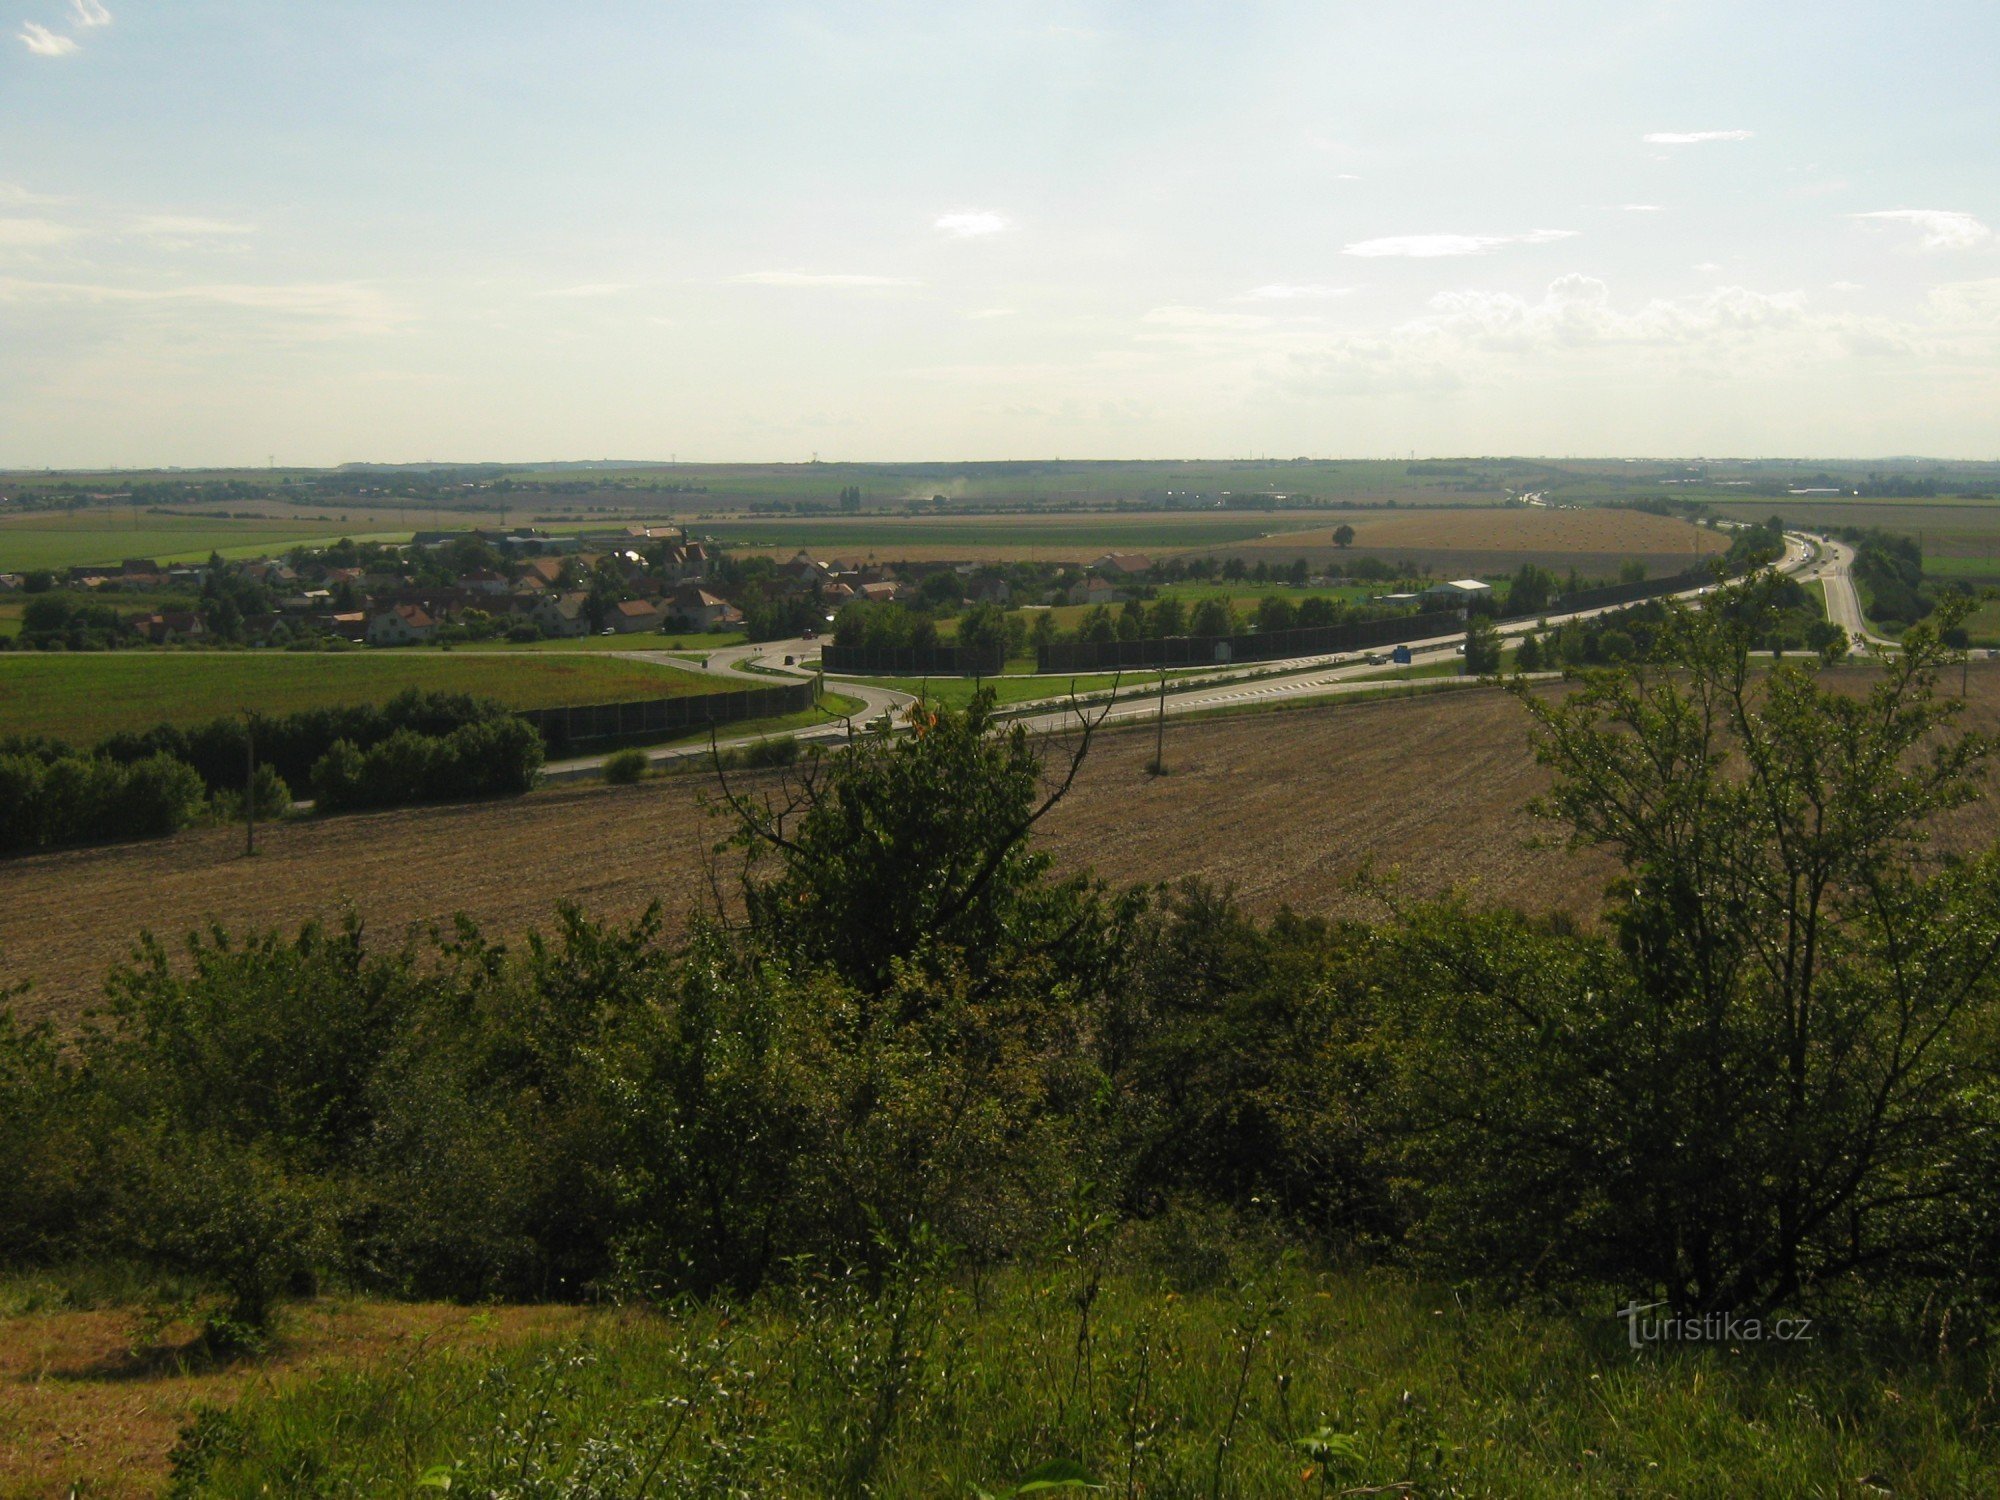 Vue de Českobrodsko, au premier plan de l'autoroute avec la sortie Bříství